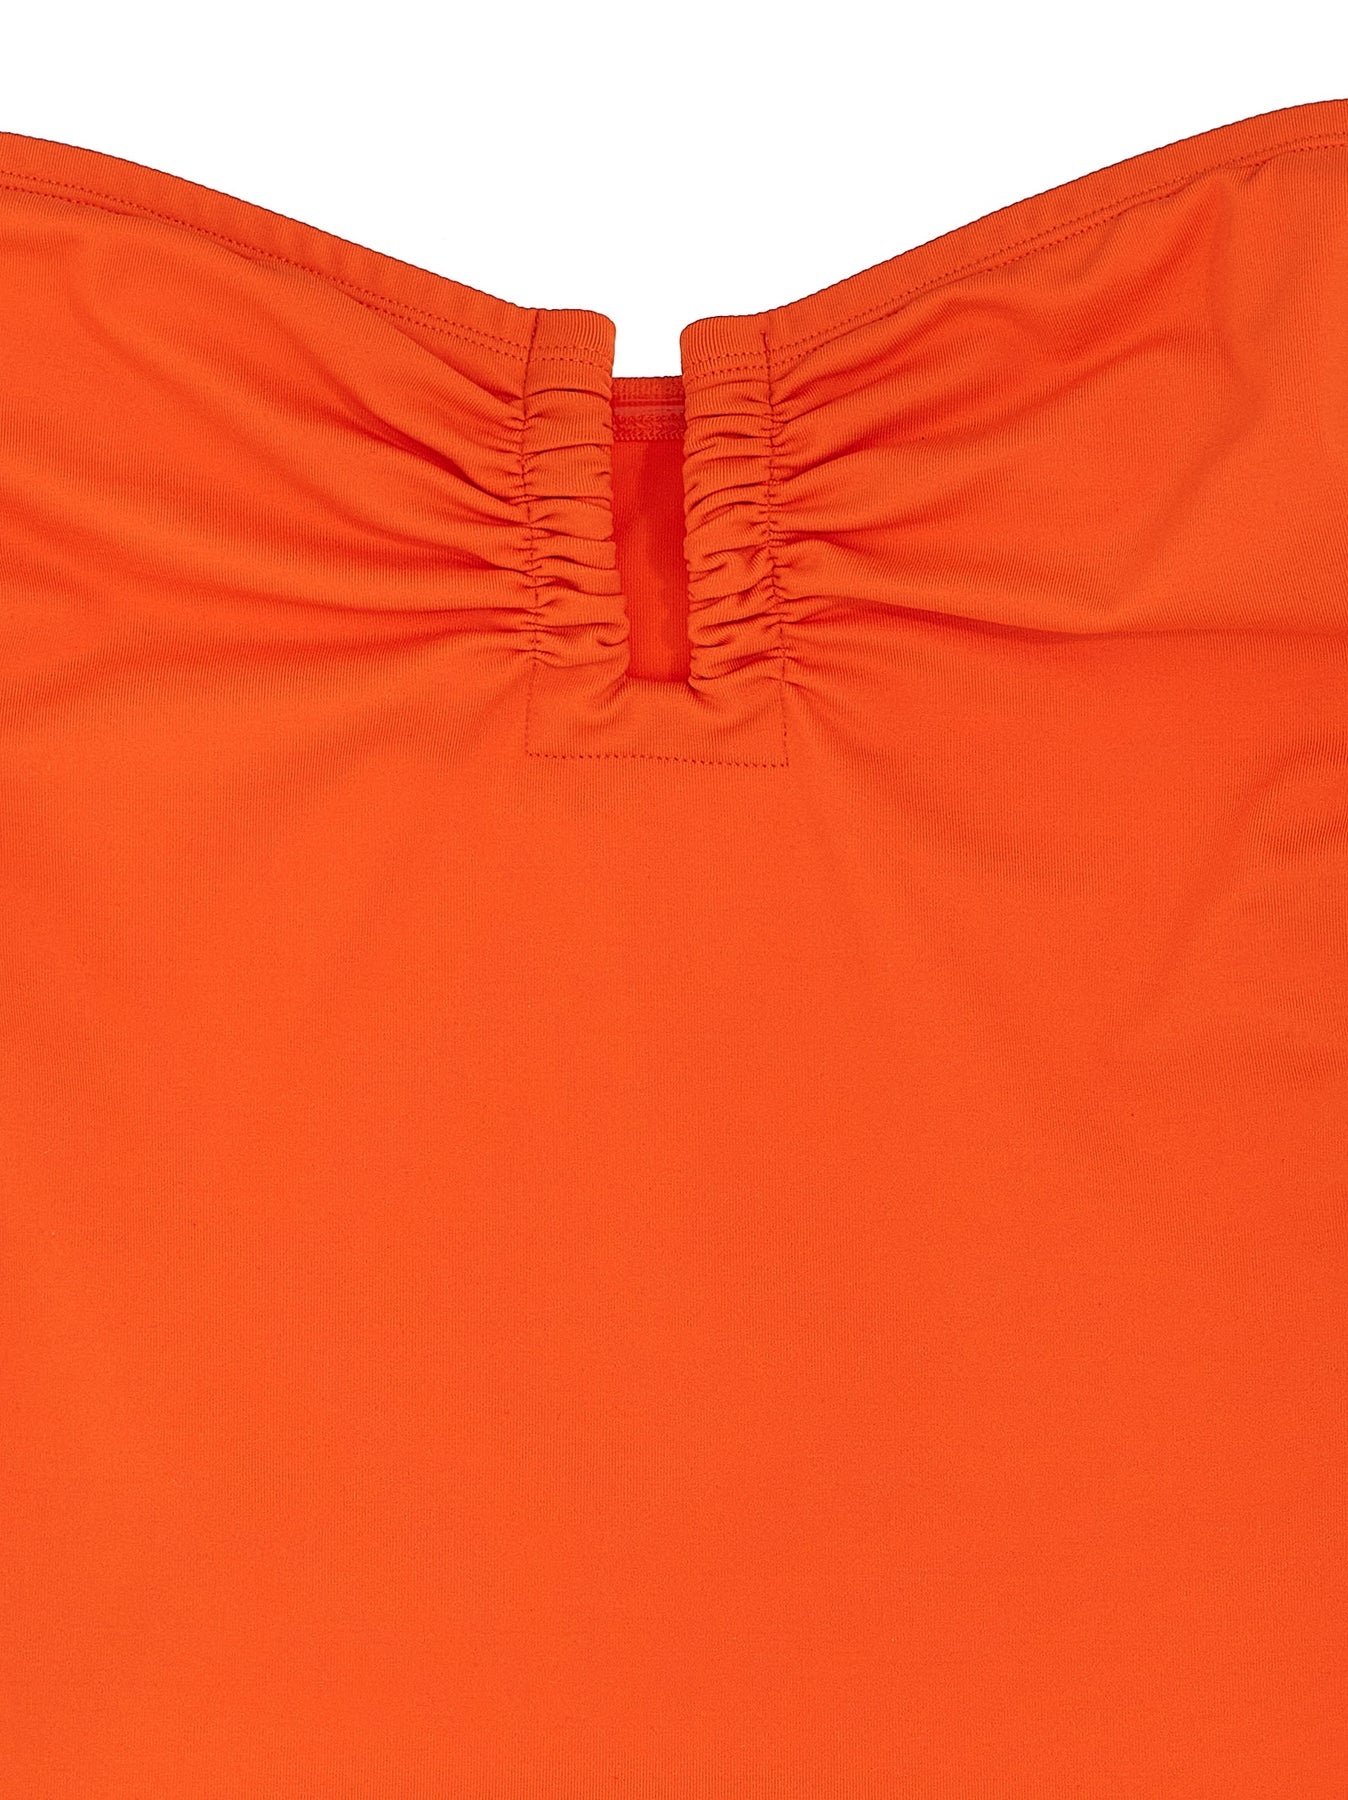 Cassiopee Beachwear Orange - 3